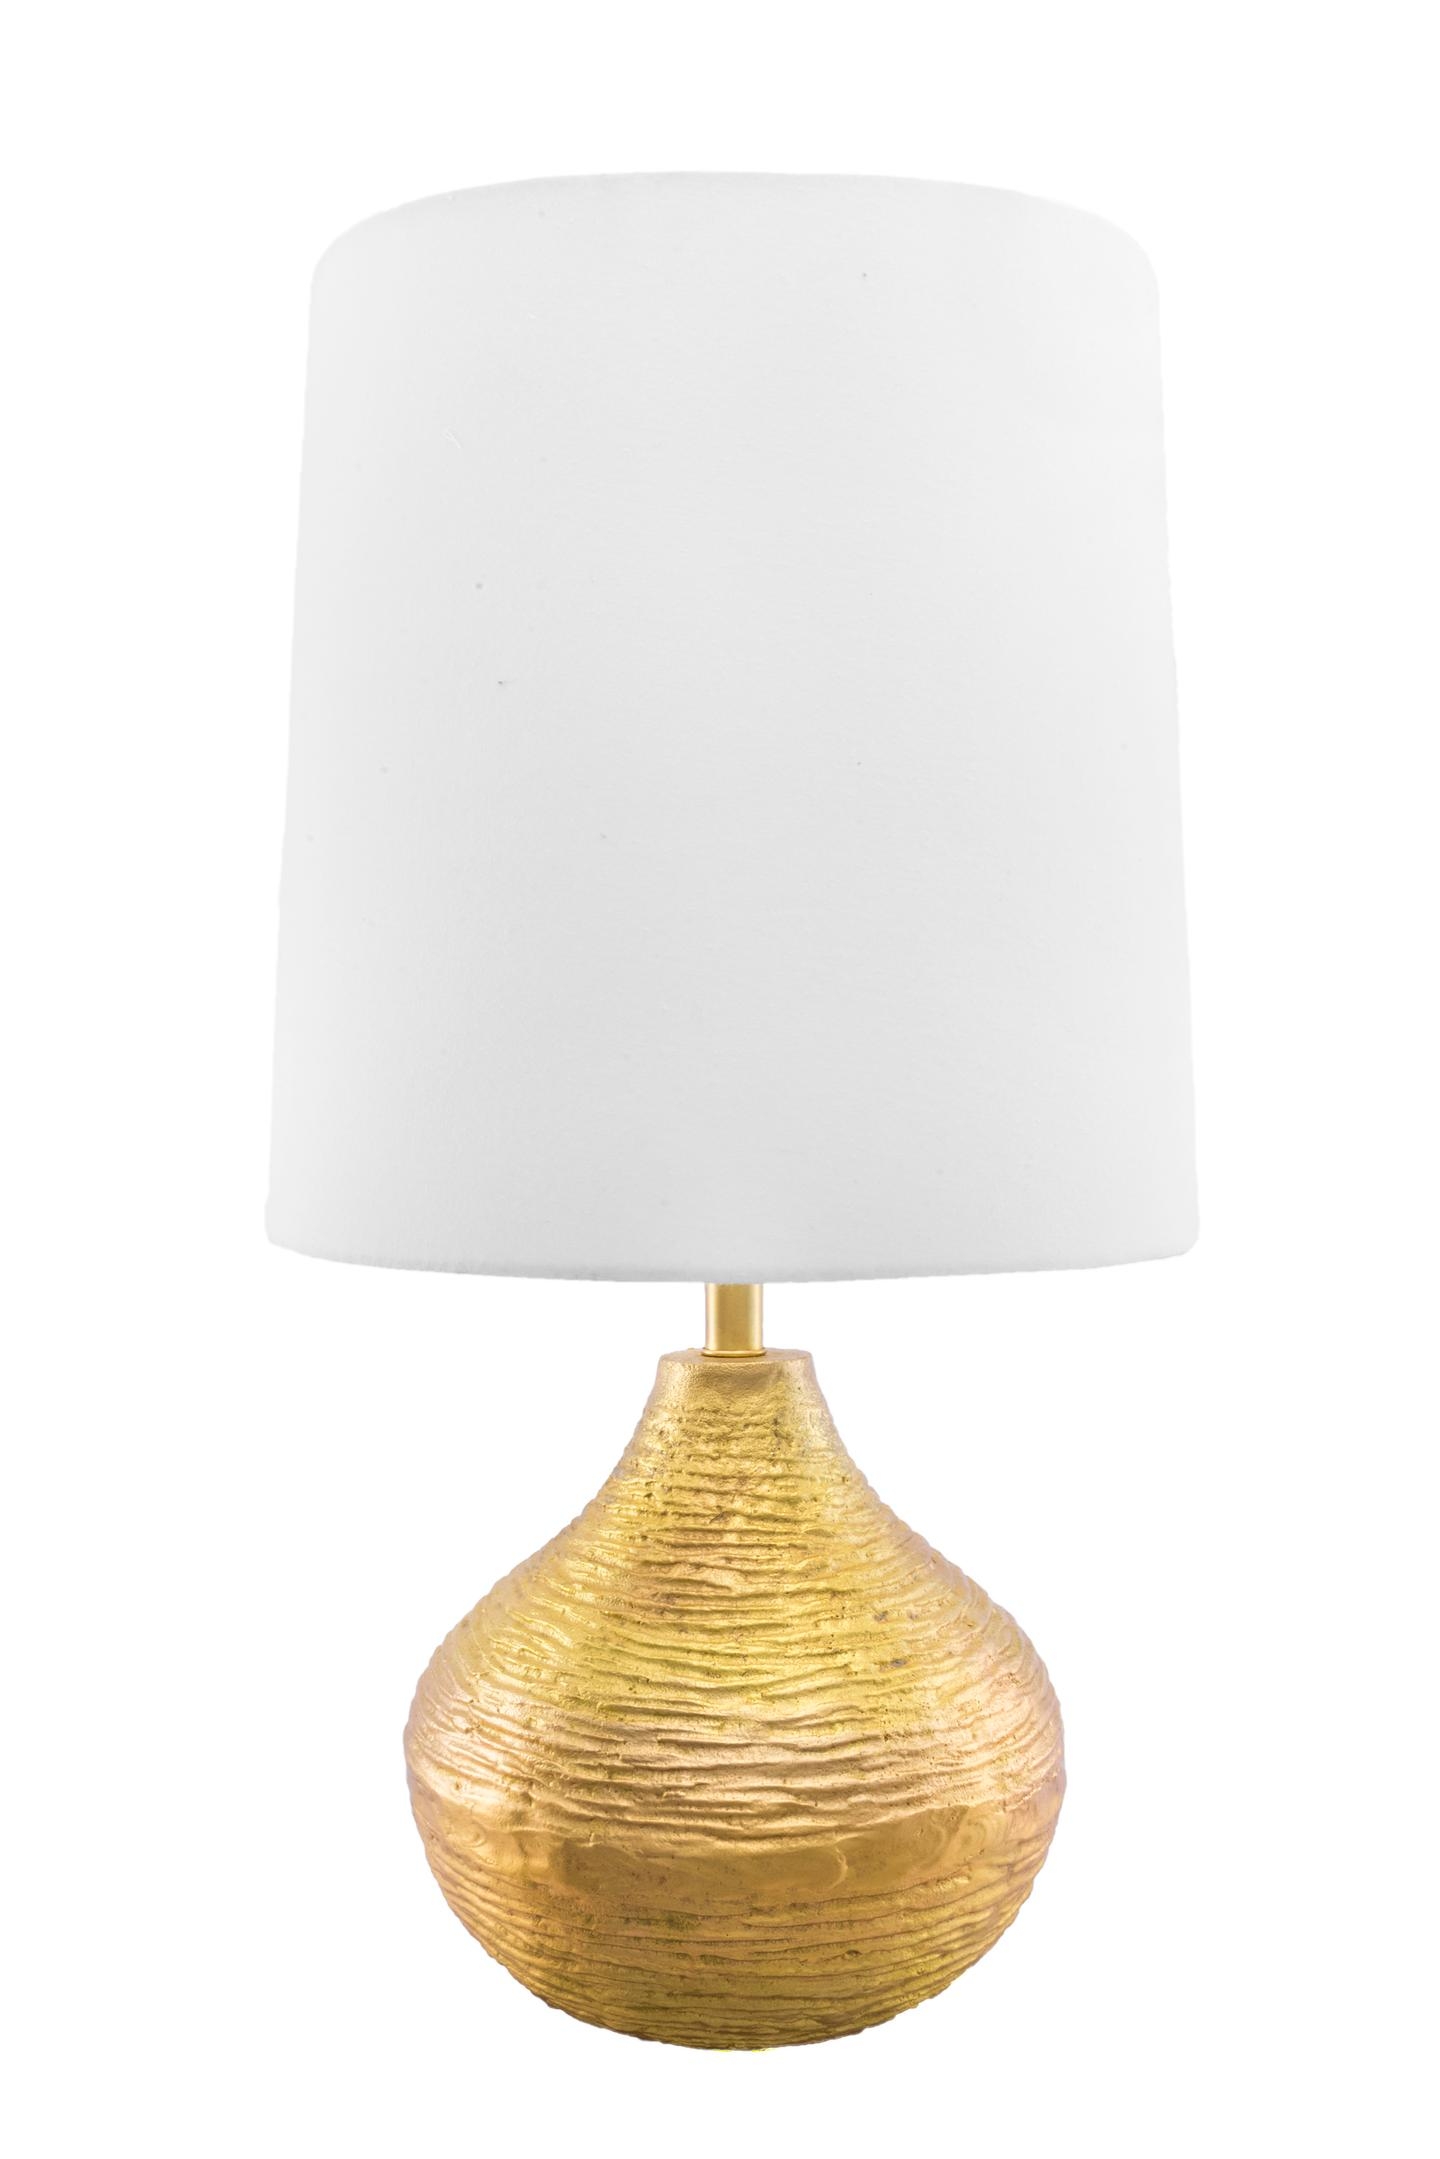 Wilson 27" Metal Table Lamp - Image 1